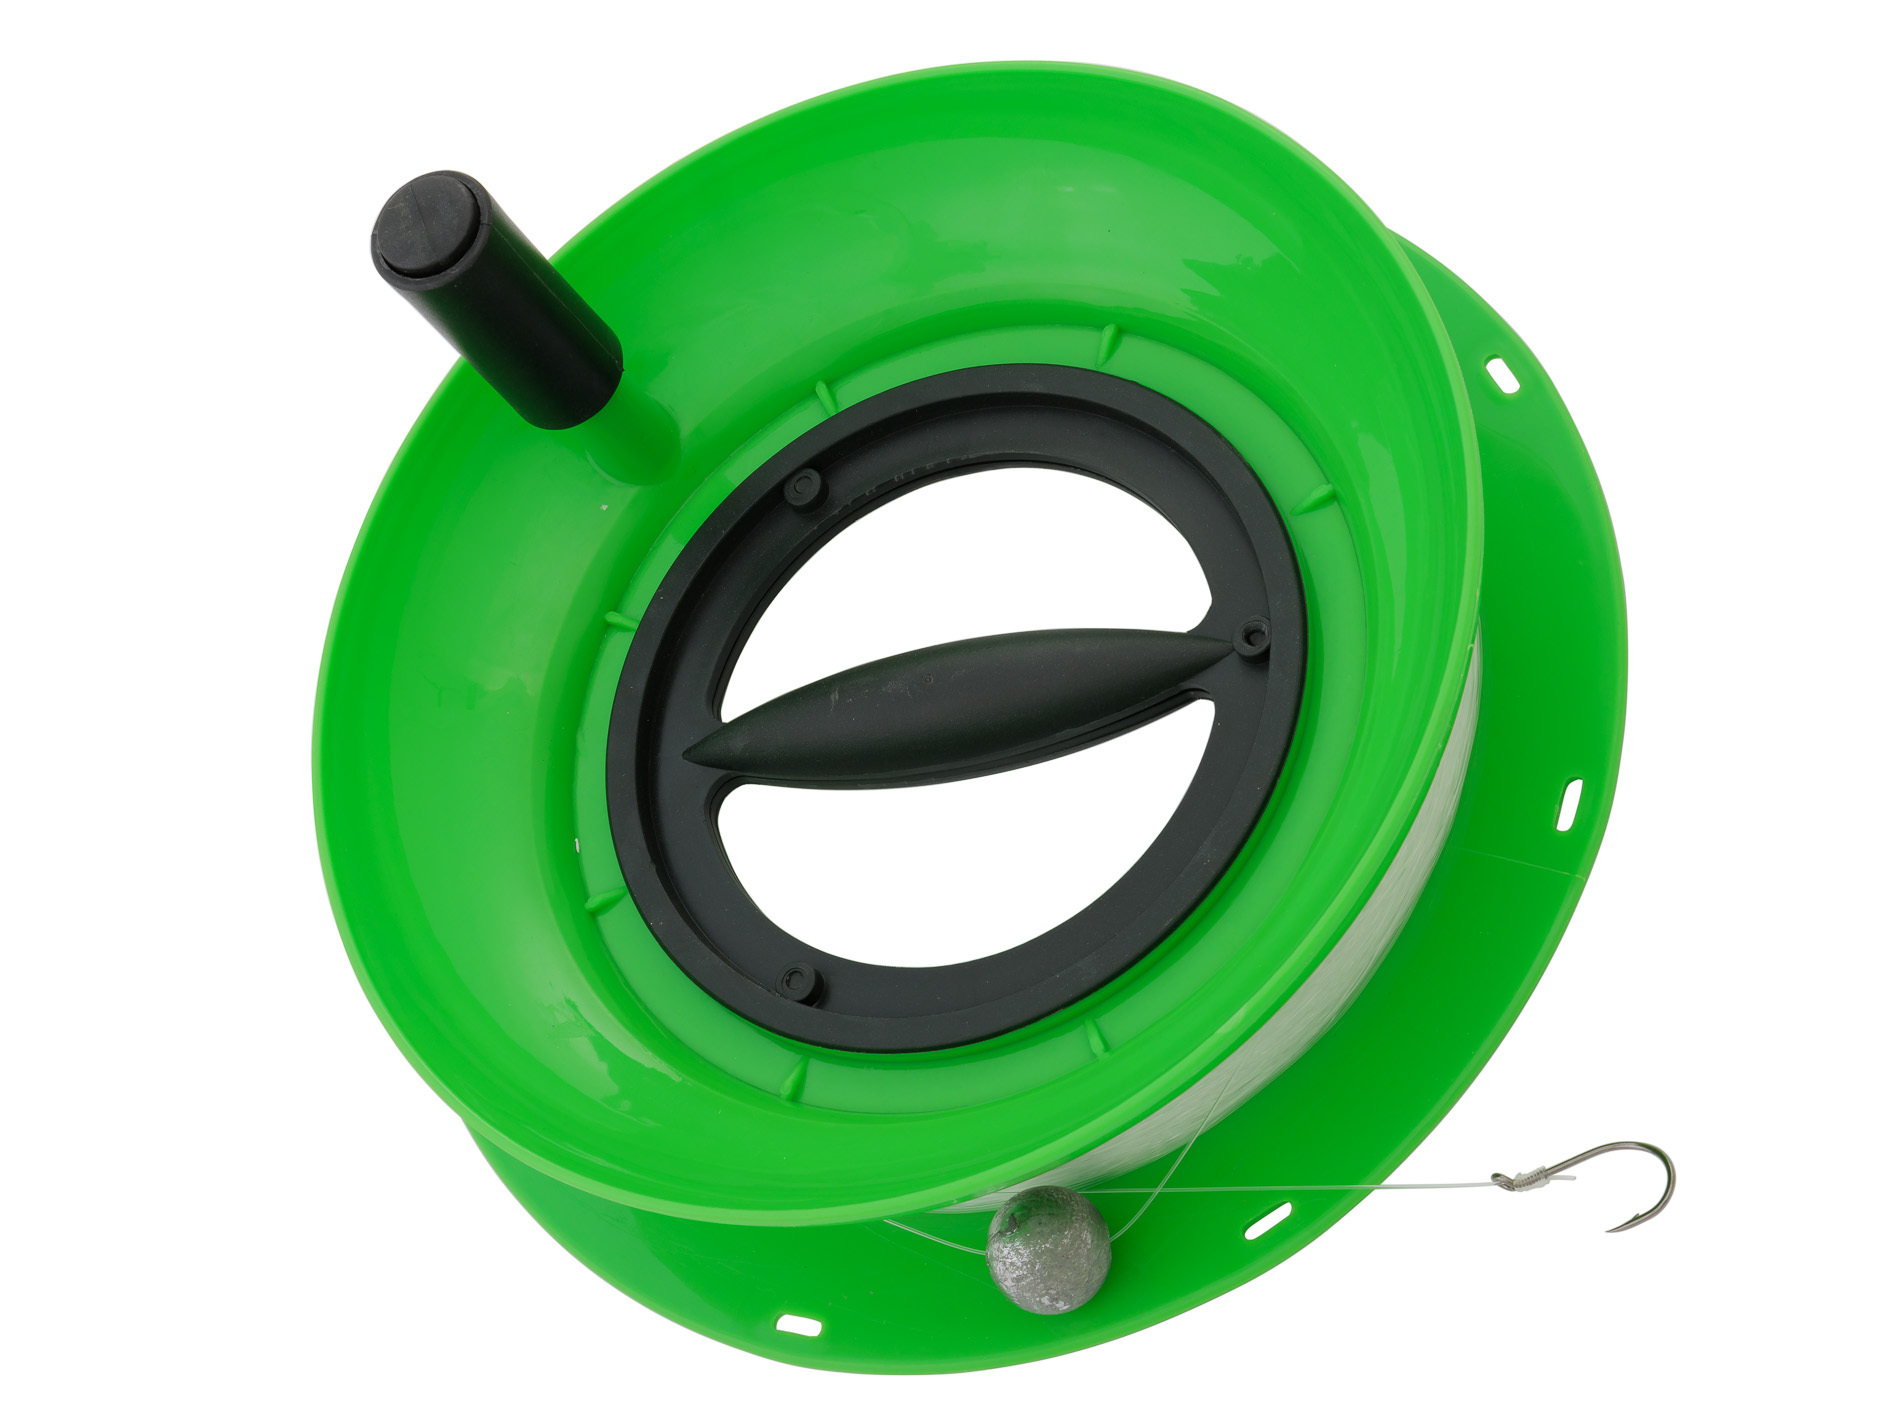 savebarn - 10 Fixed Handle Hand Caster Fishing Spool with Line